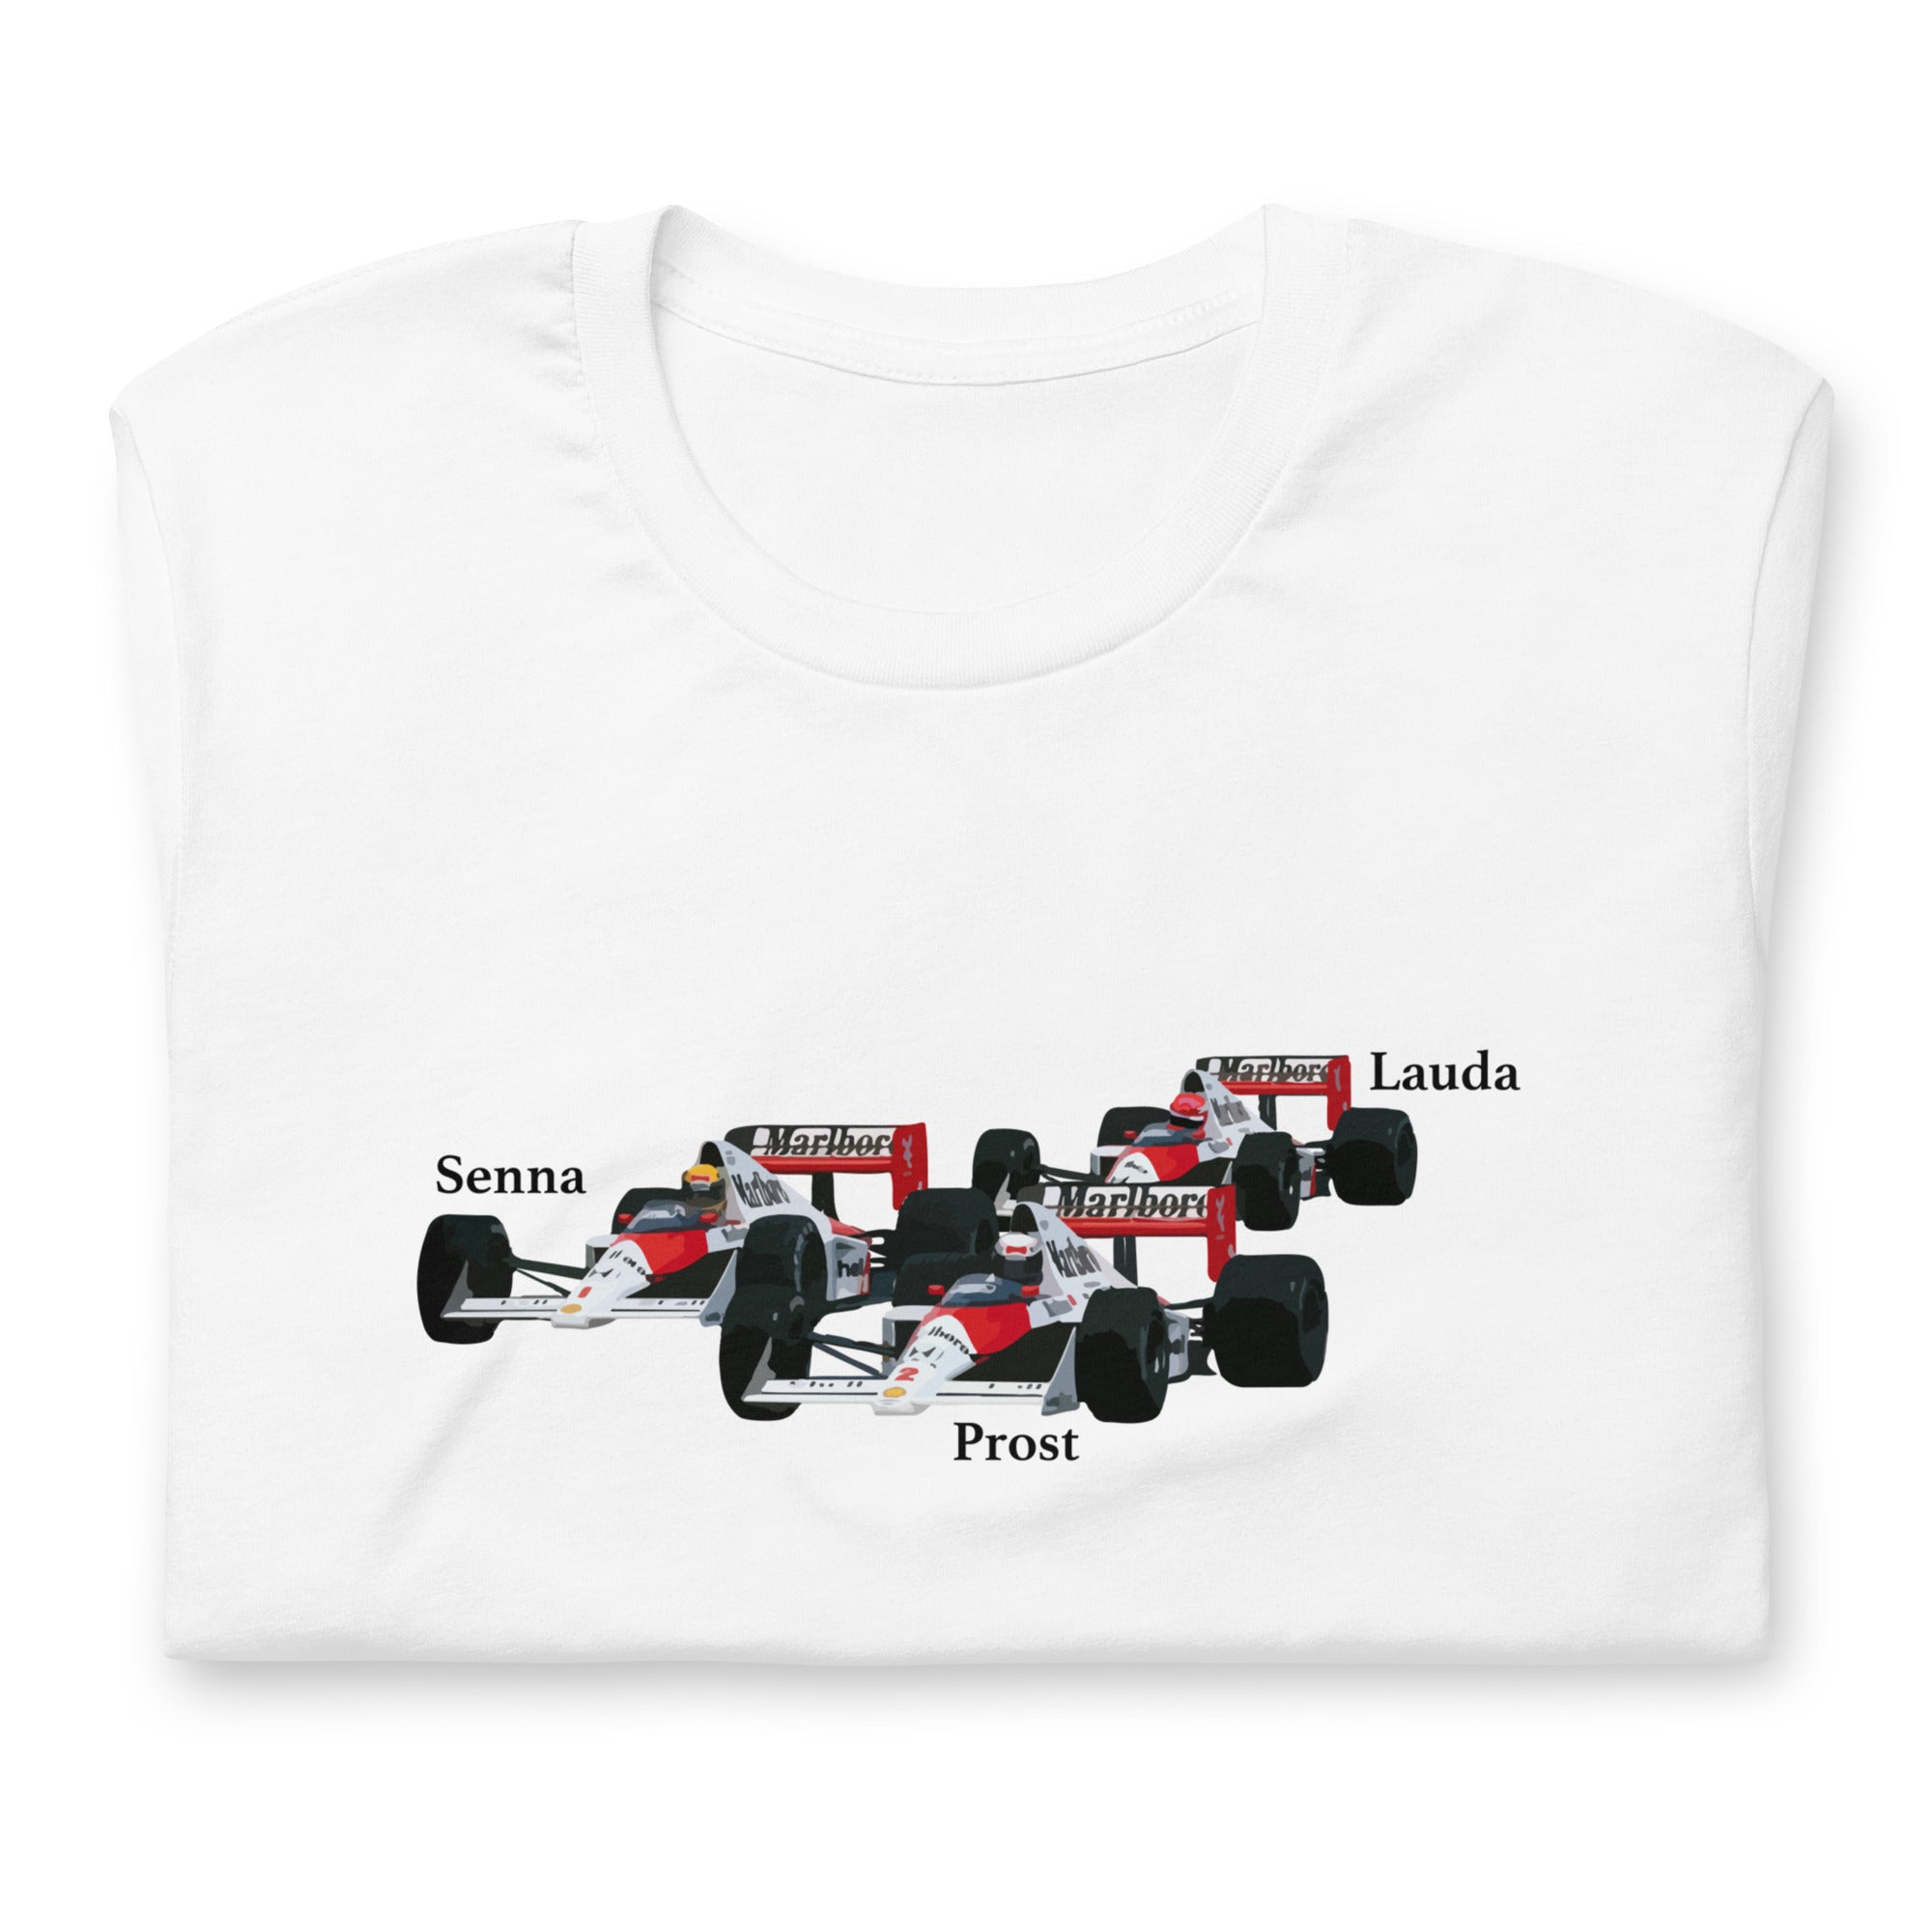 Senna Lauda Prost McLaren F1 legends white tshirt folded